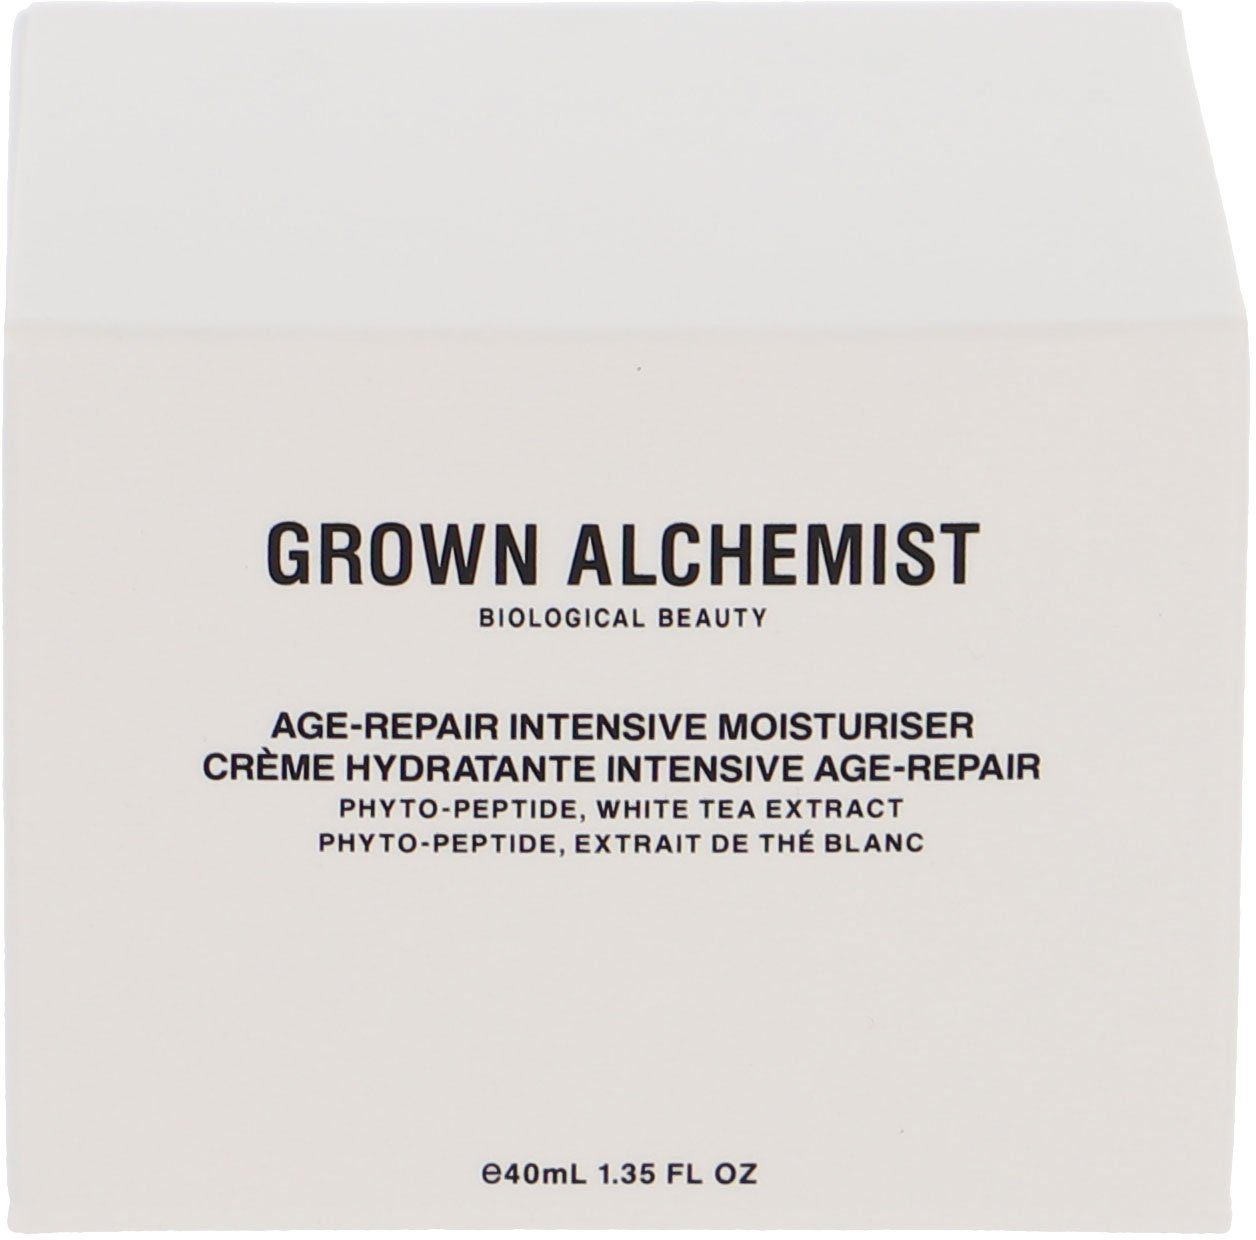 Tea Anti-Aging-Creme Extract, Age-Repair Phyto-Peptide GROWN Intensive Moisturiser, ALCHEMIST White